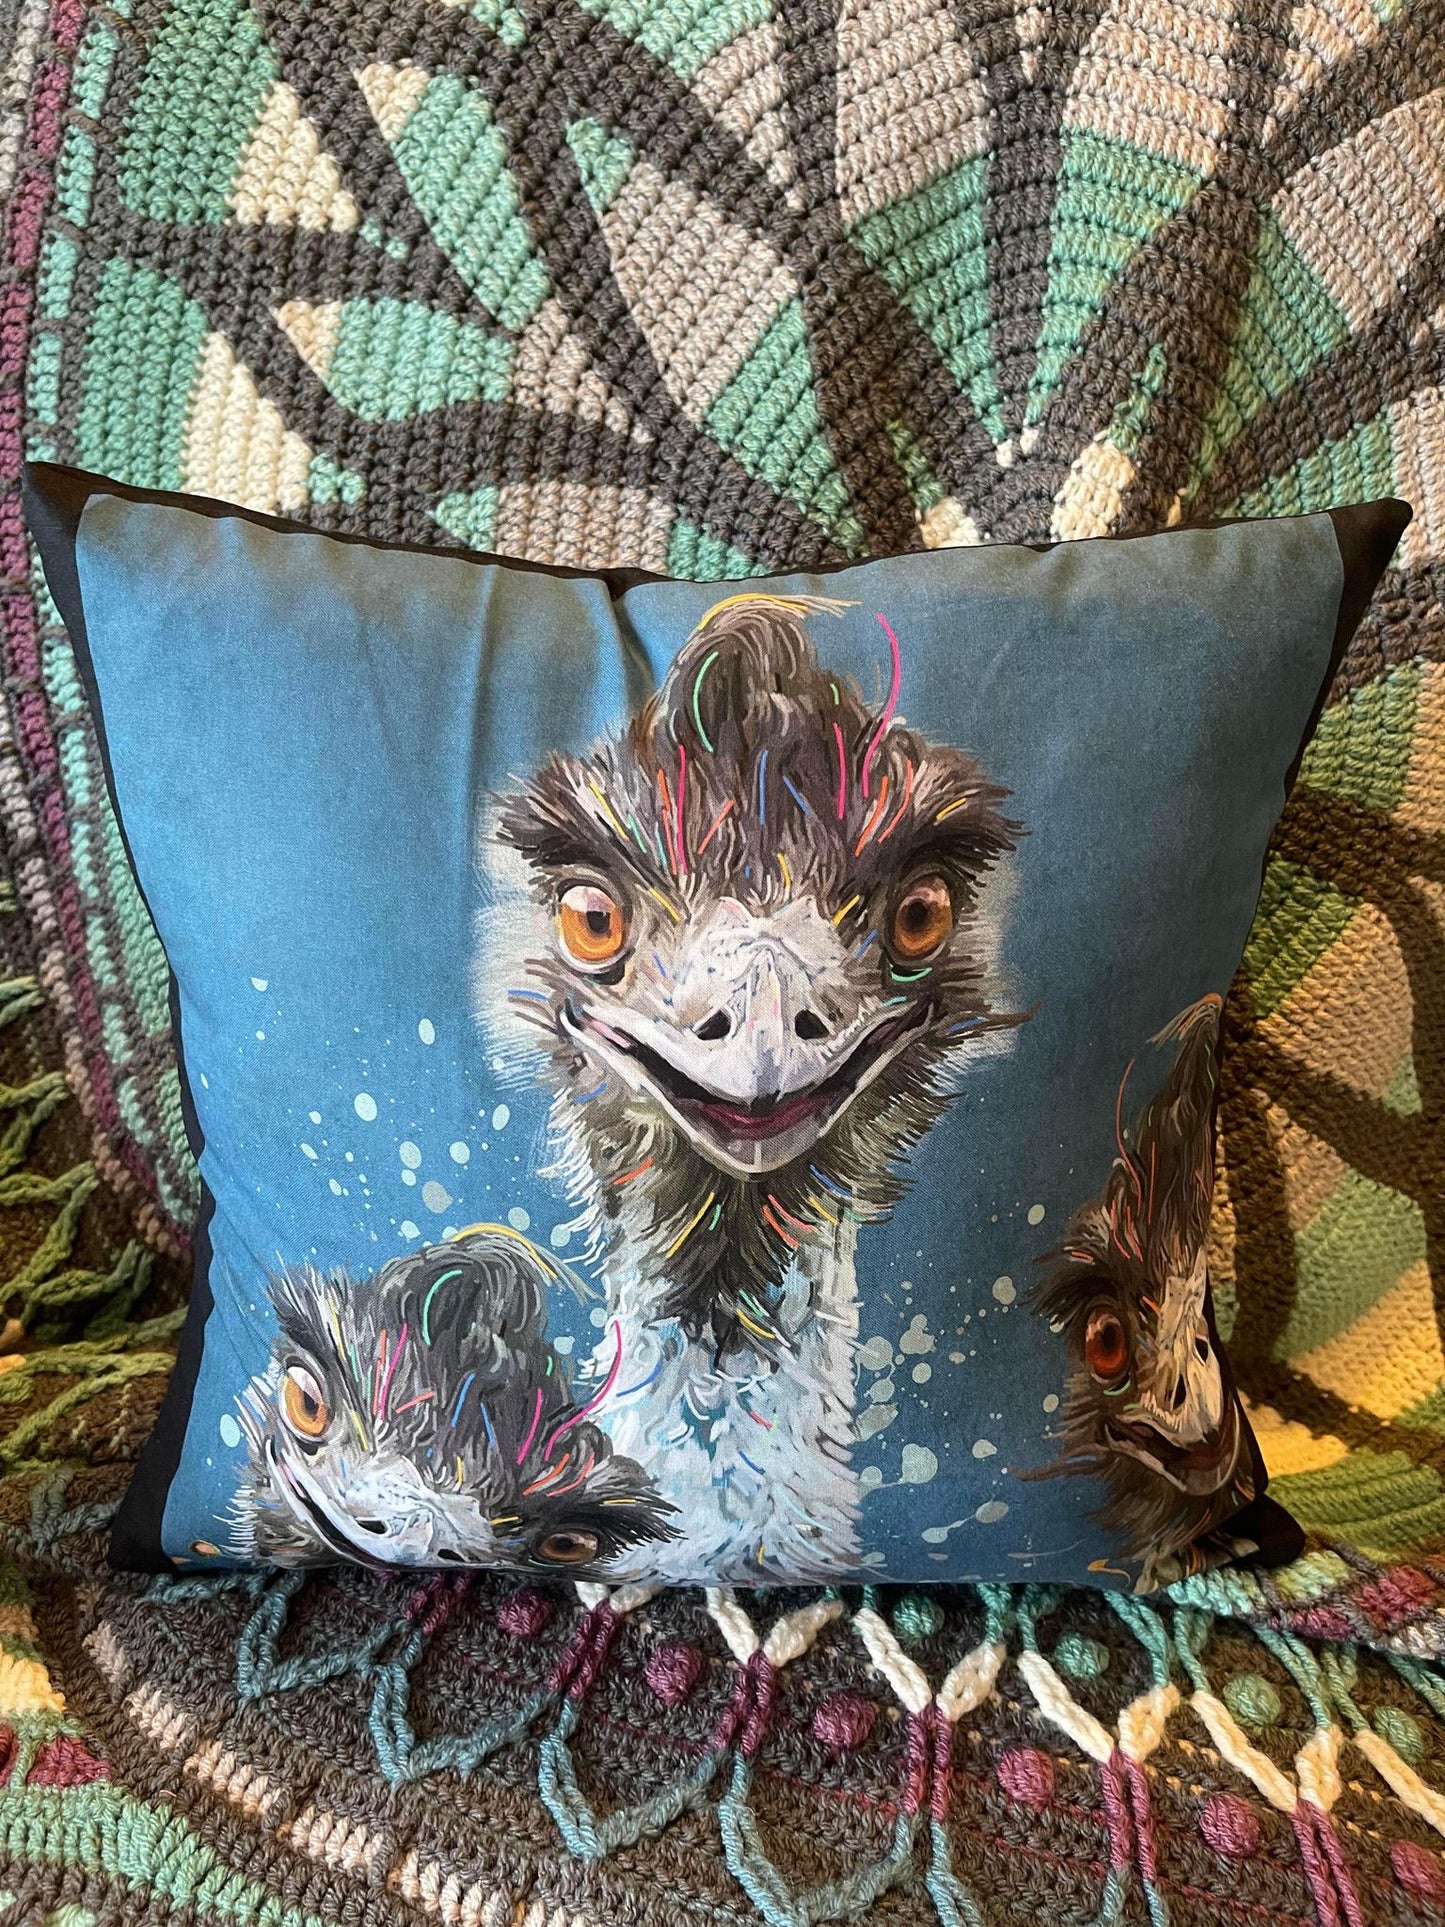 Bird cushions.